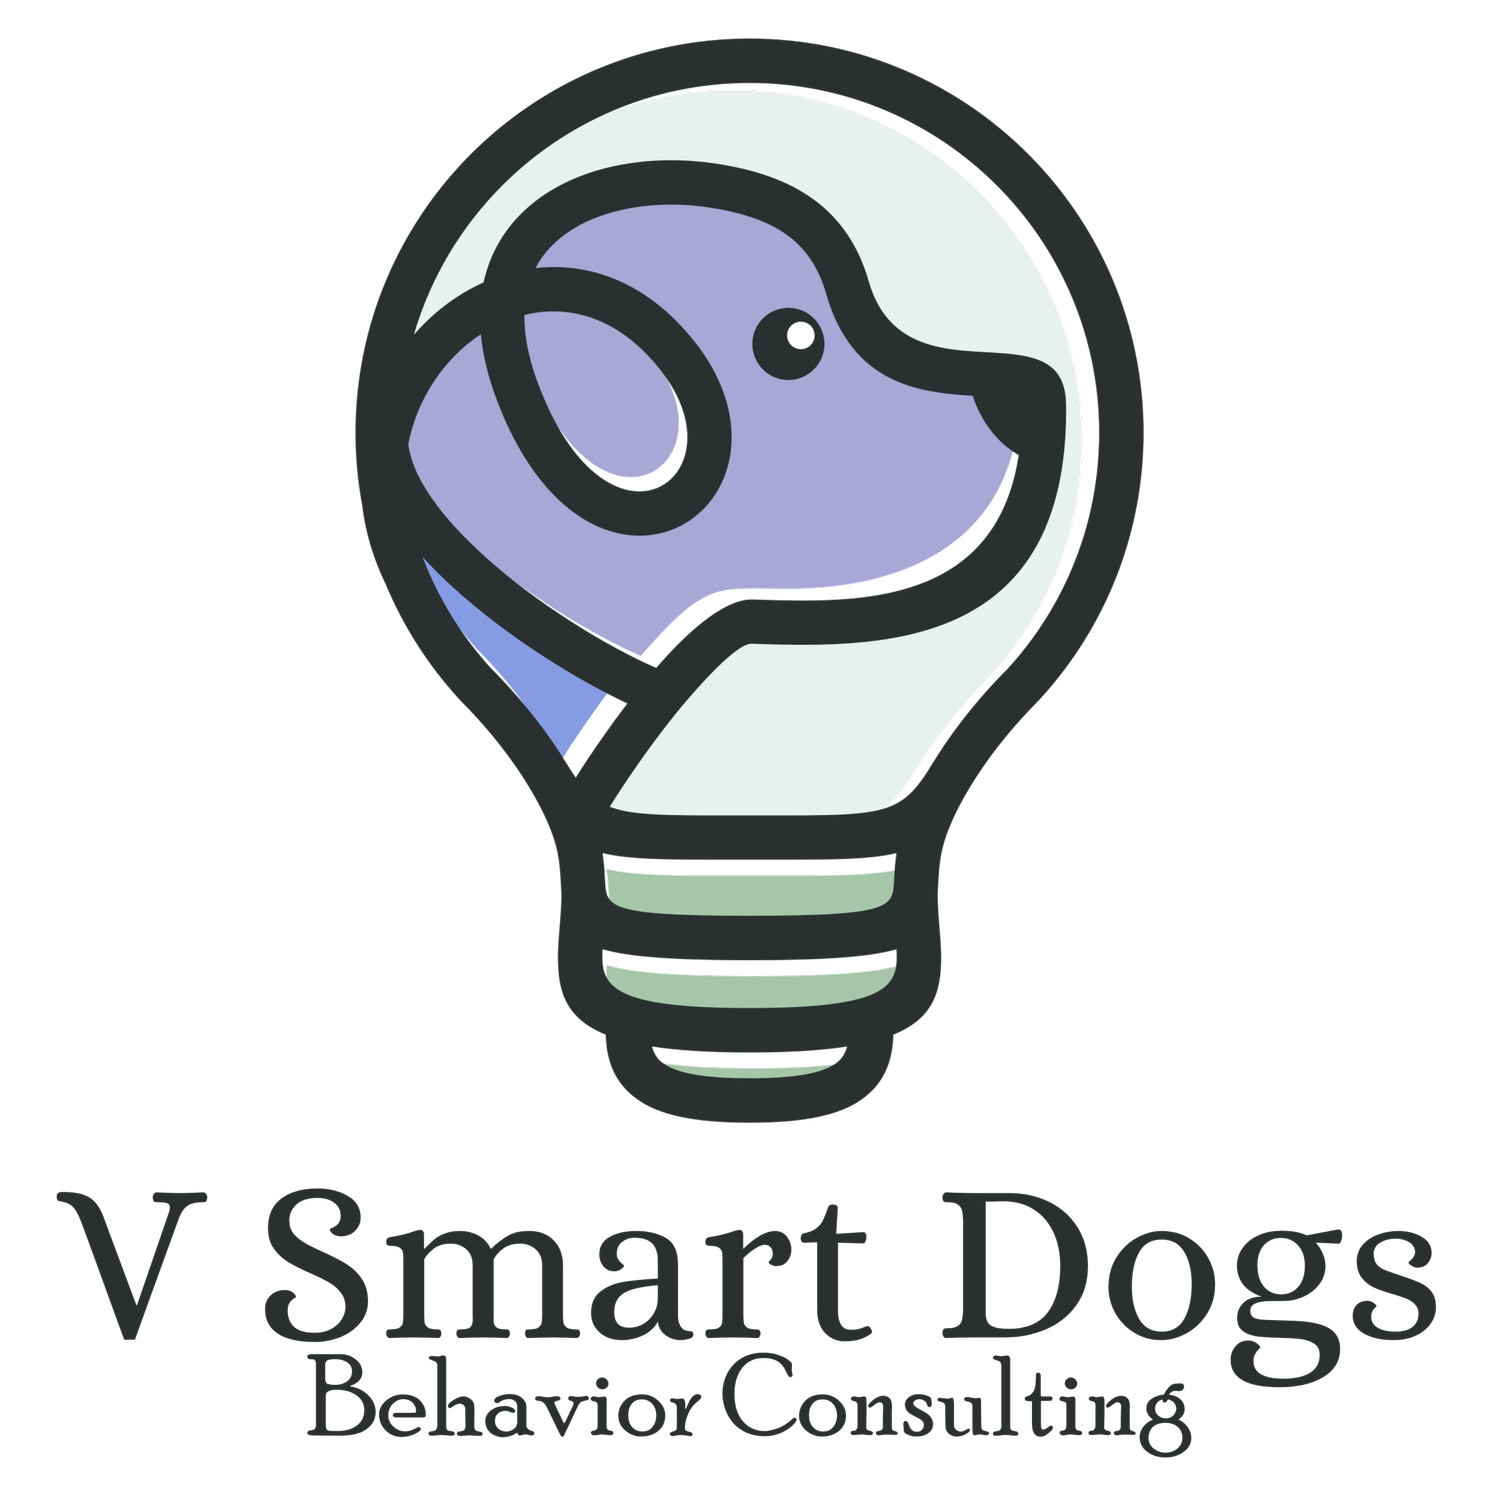 V Smart Dogs - Behavior Consulting